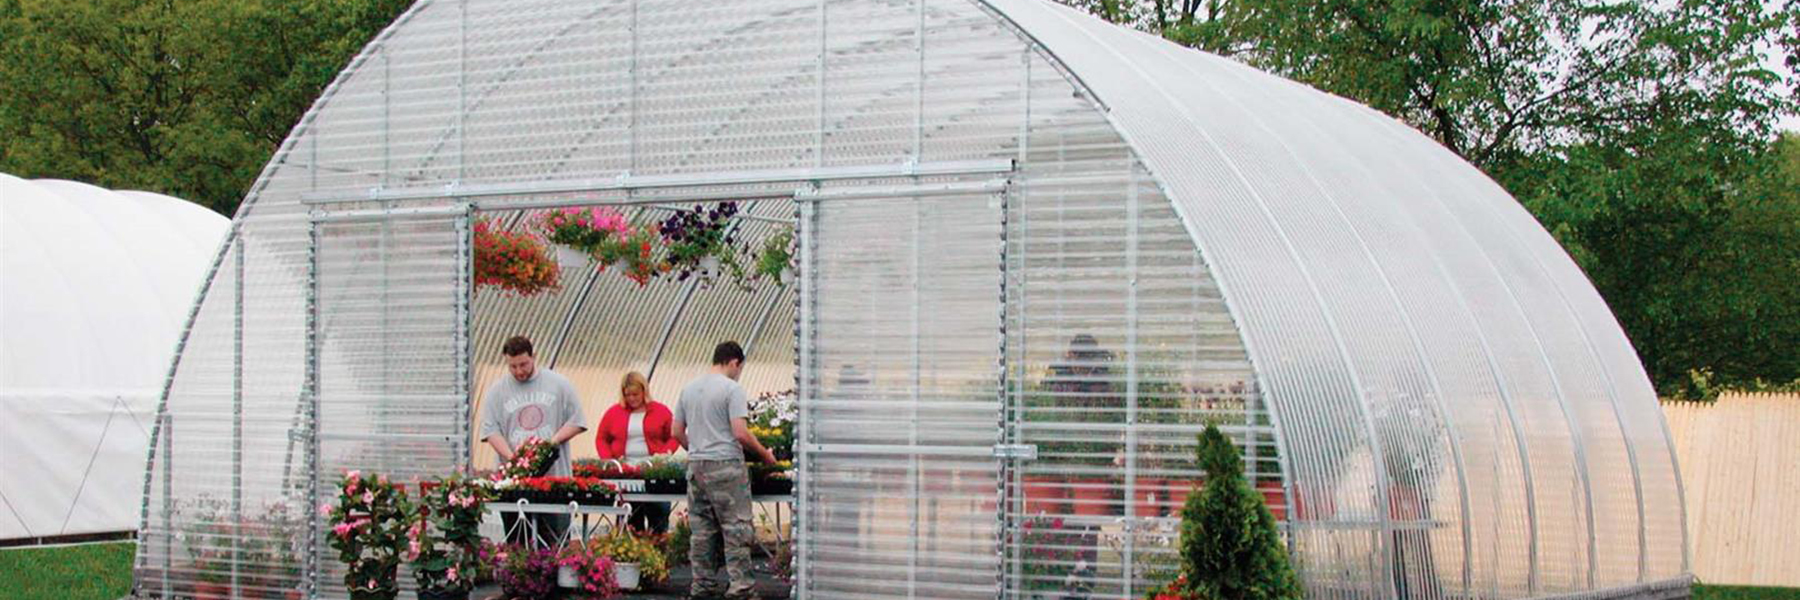 backyard greenhouse outside